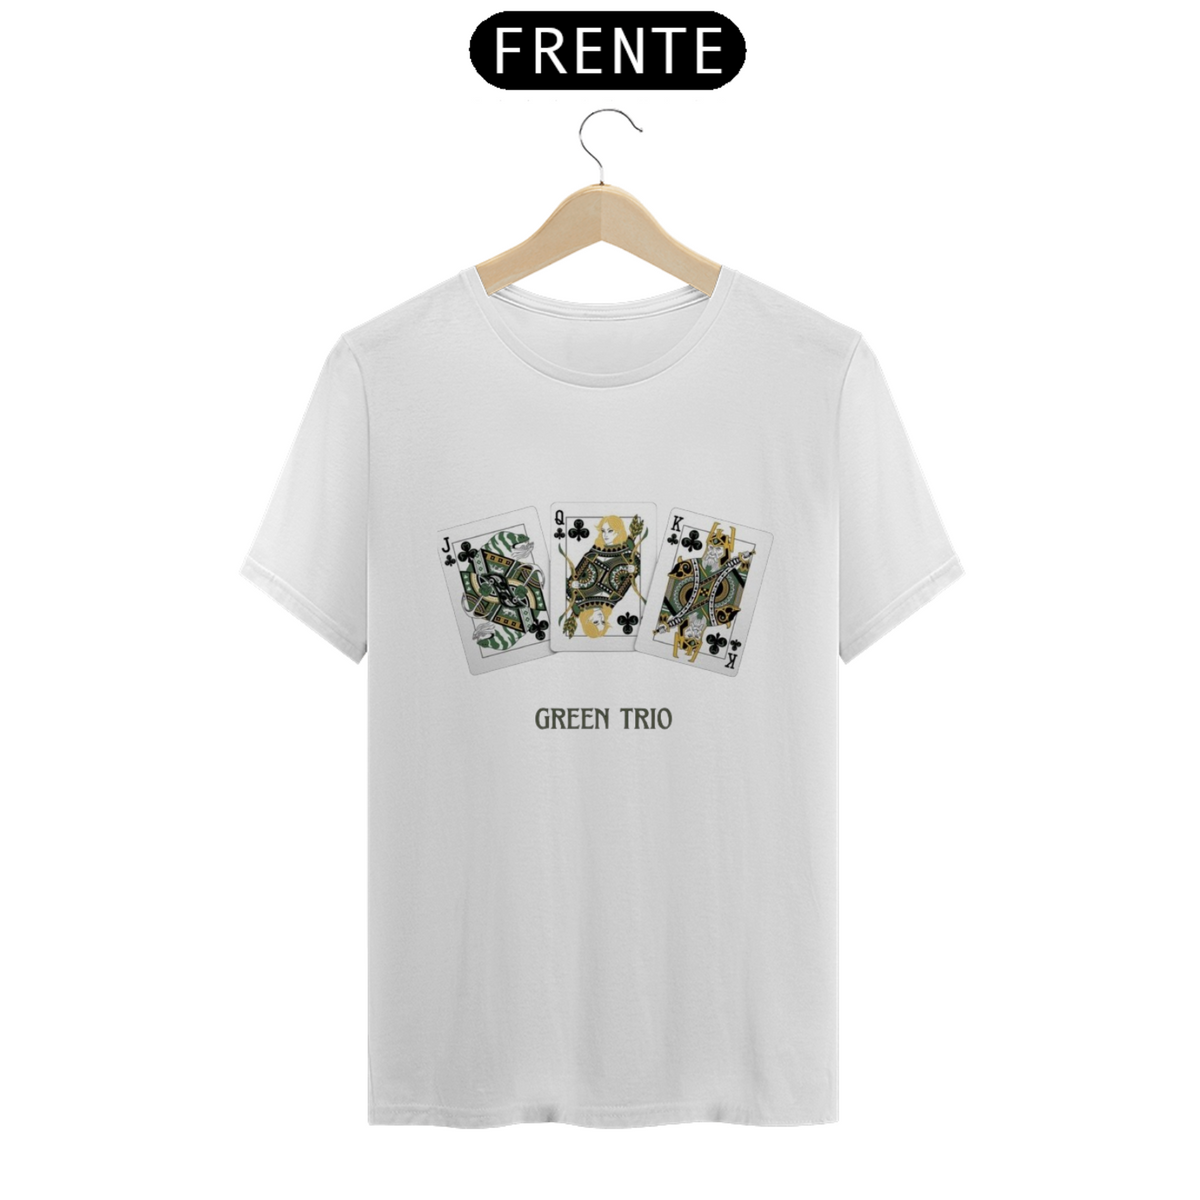 Nome do produto: Camiseta Green Trio